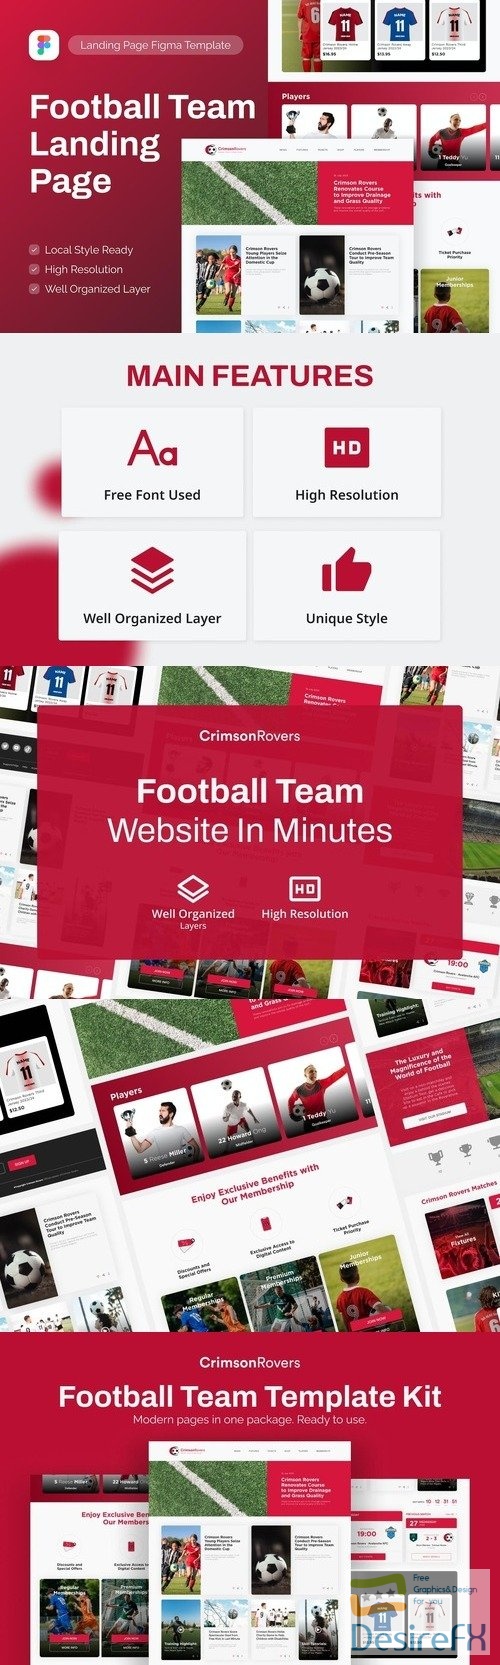 Crimson Rovers - Football Team Landing Page Figma